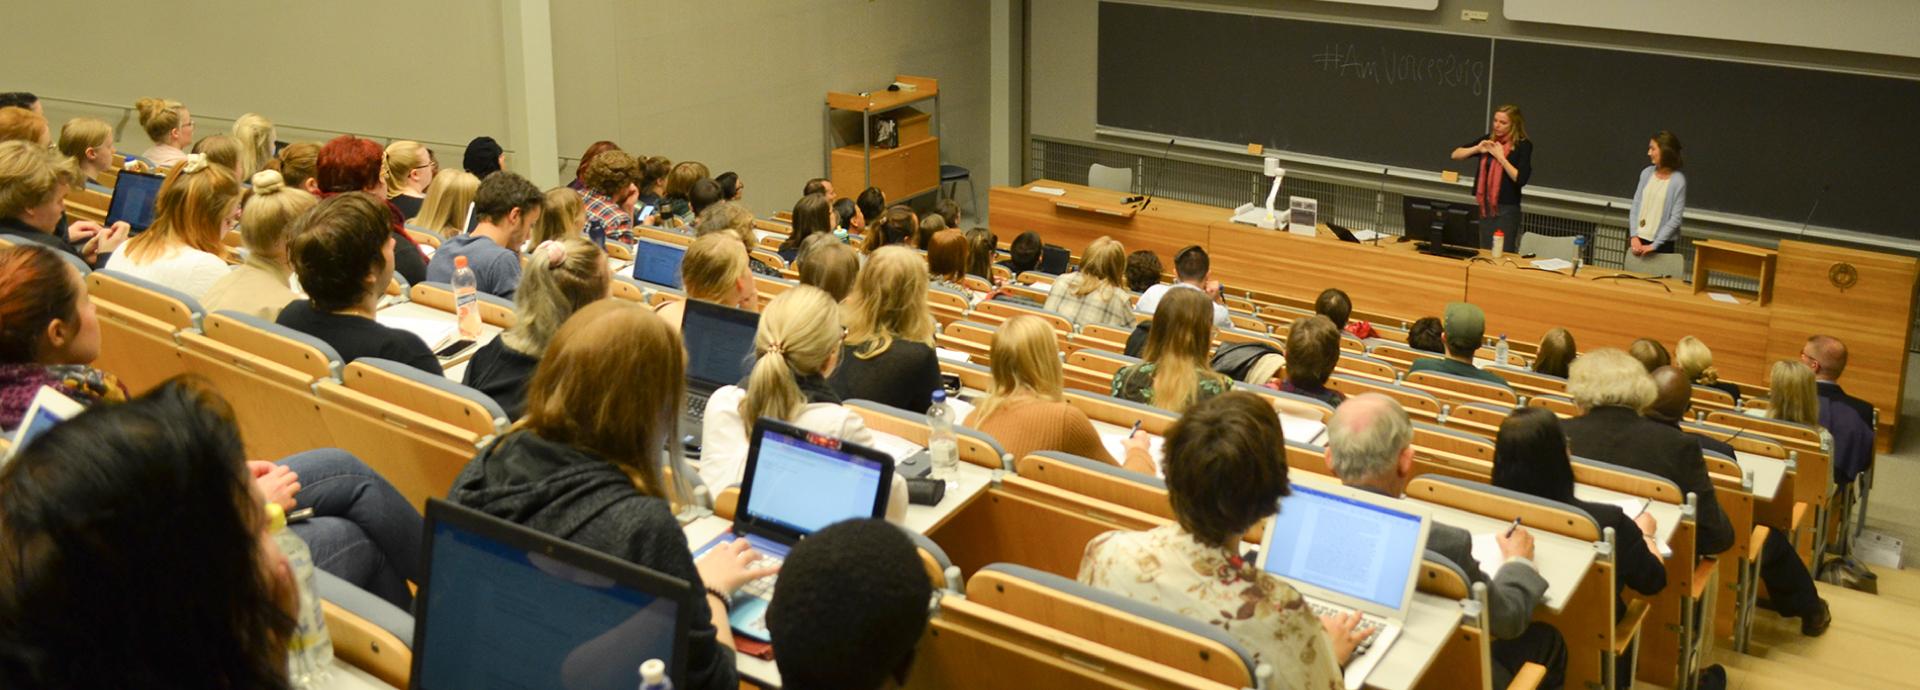 Lecture in Turku University